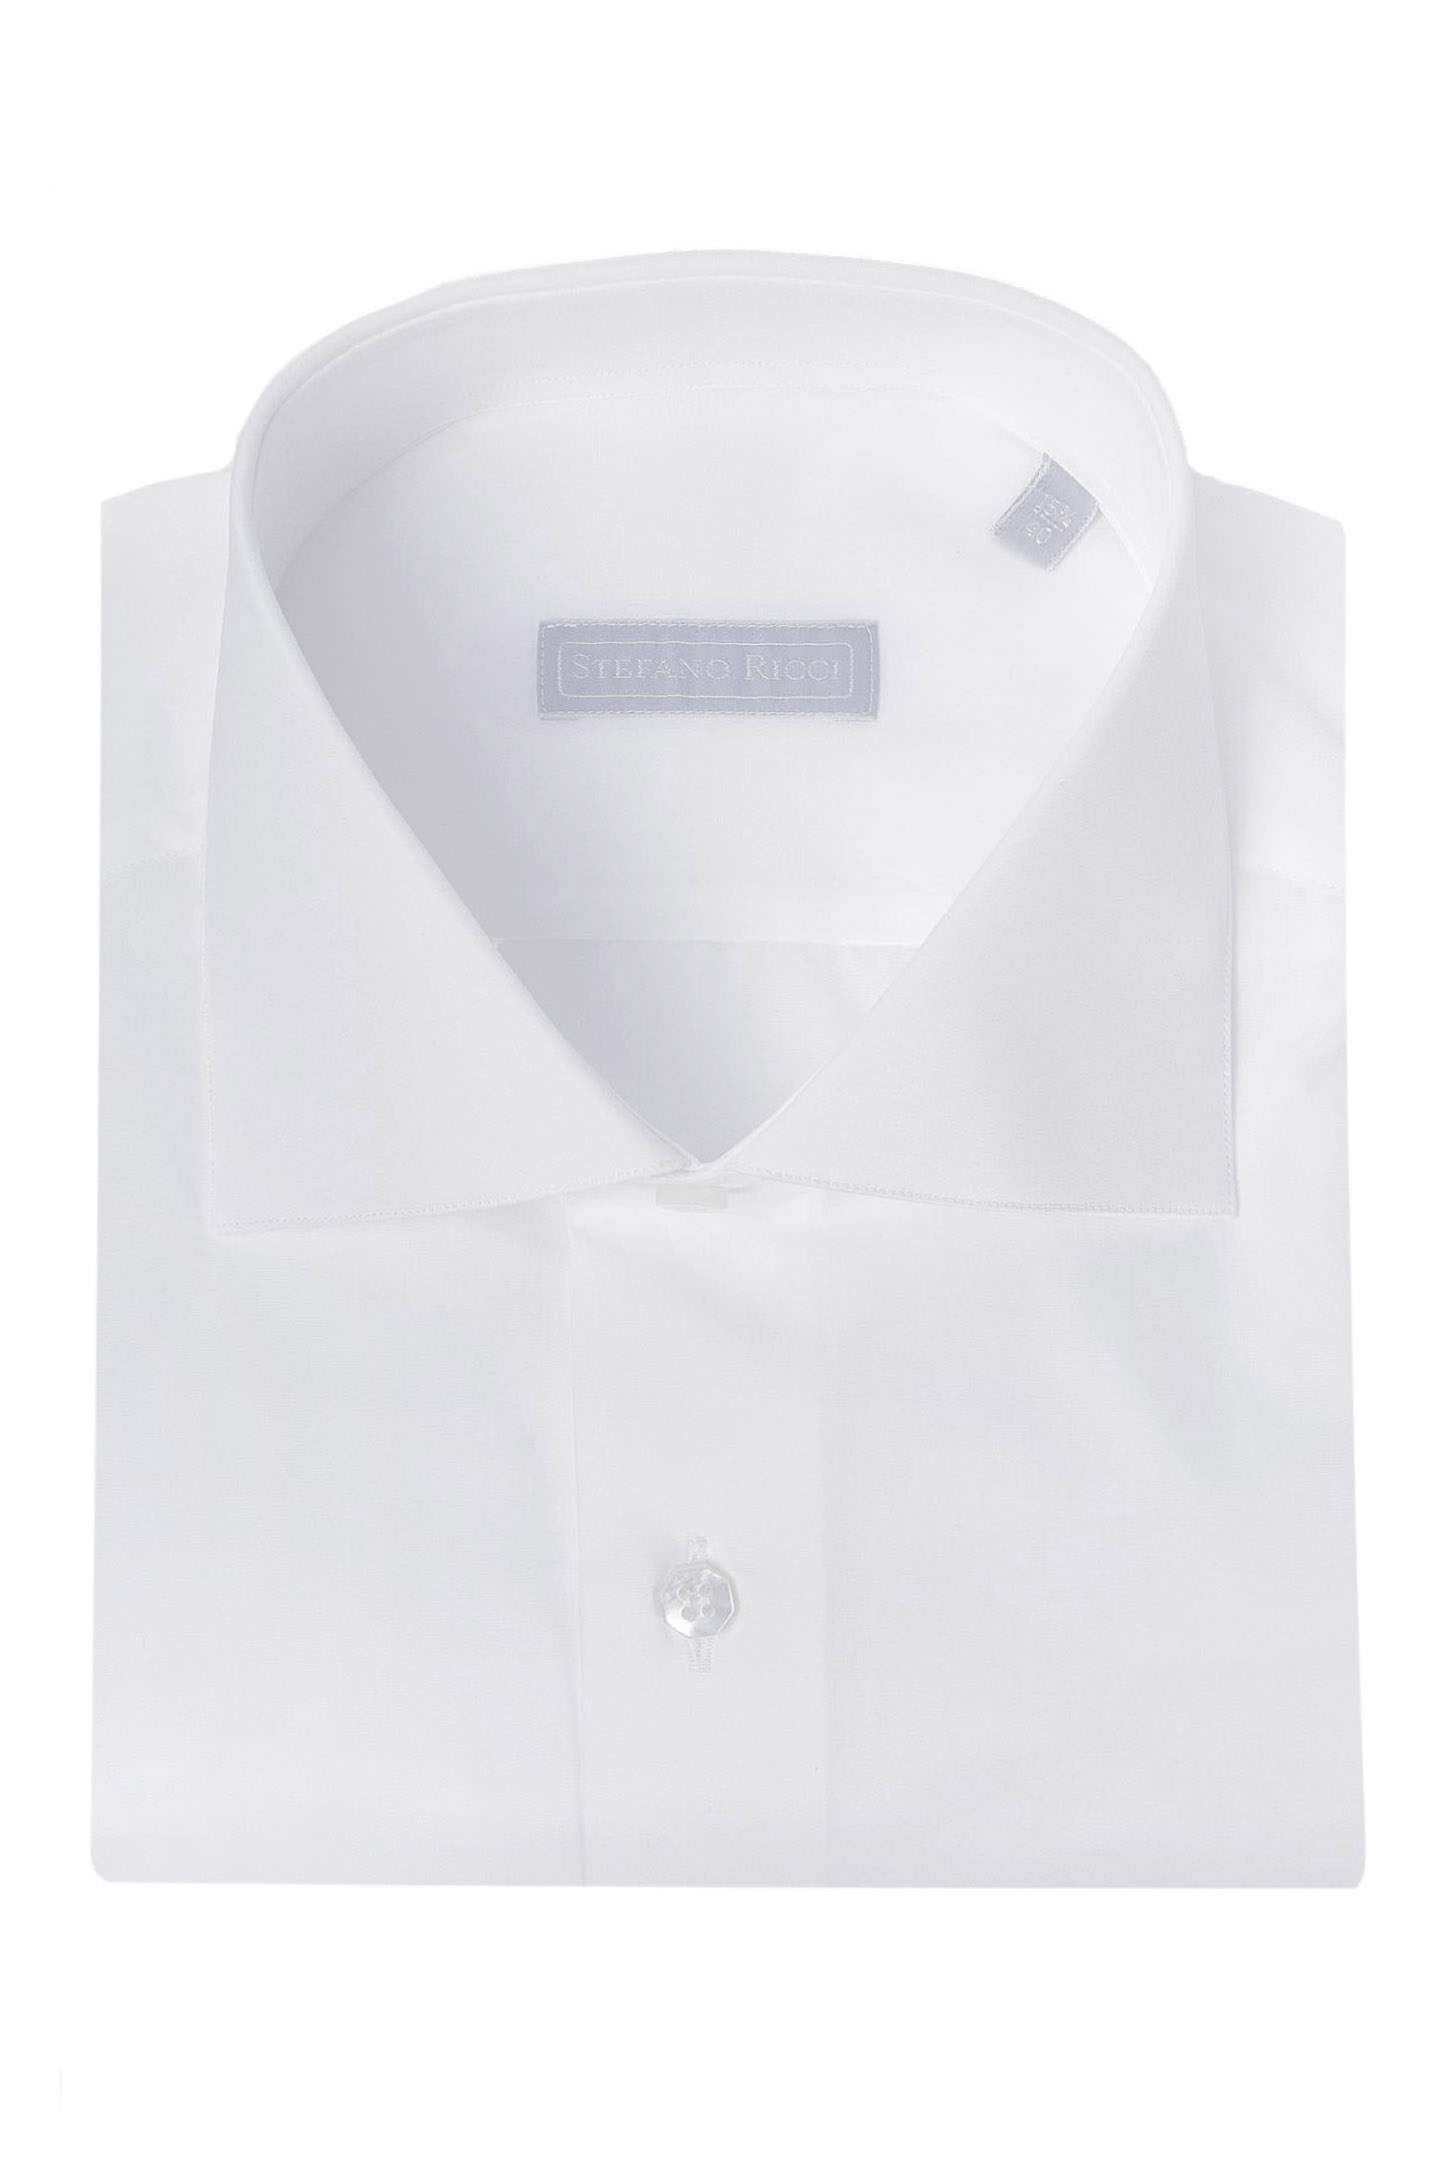 Рубашка STEFANO RICCI MC000272 A304, цвет: Белый, Мужской